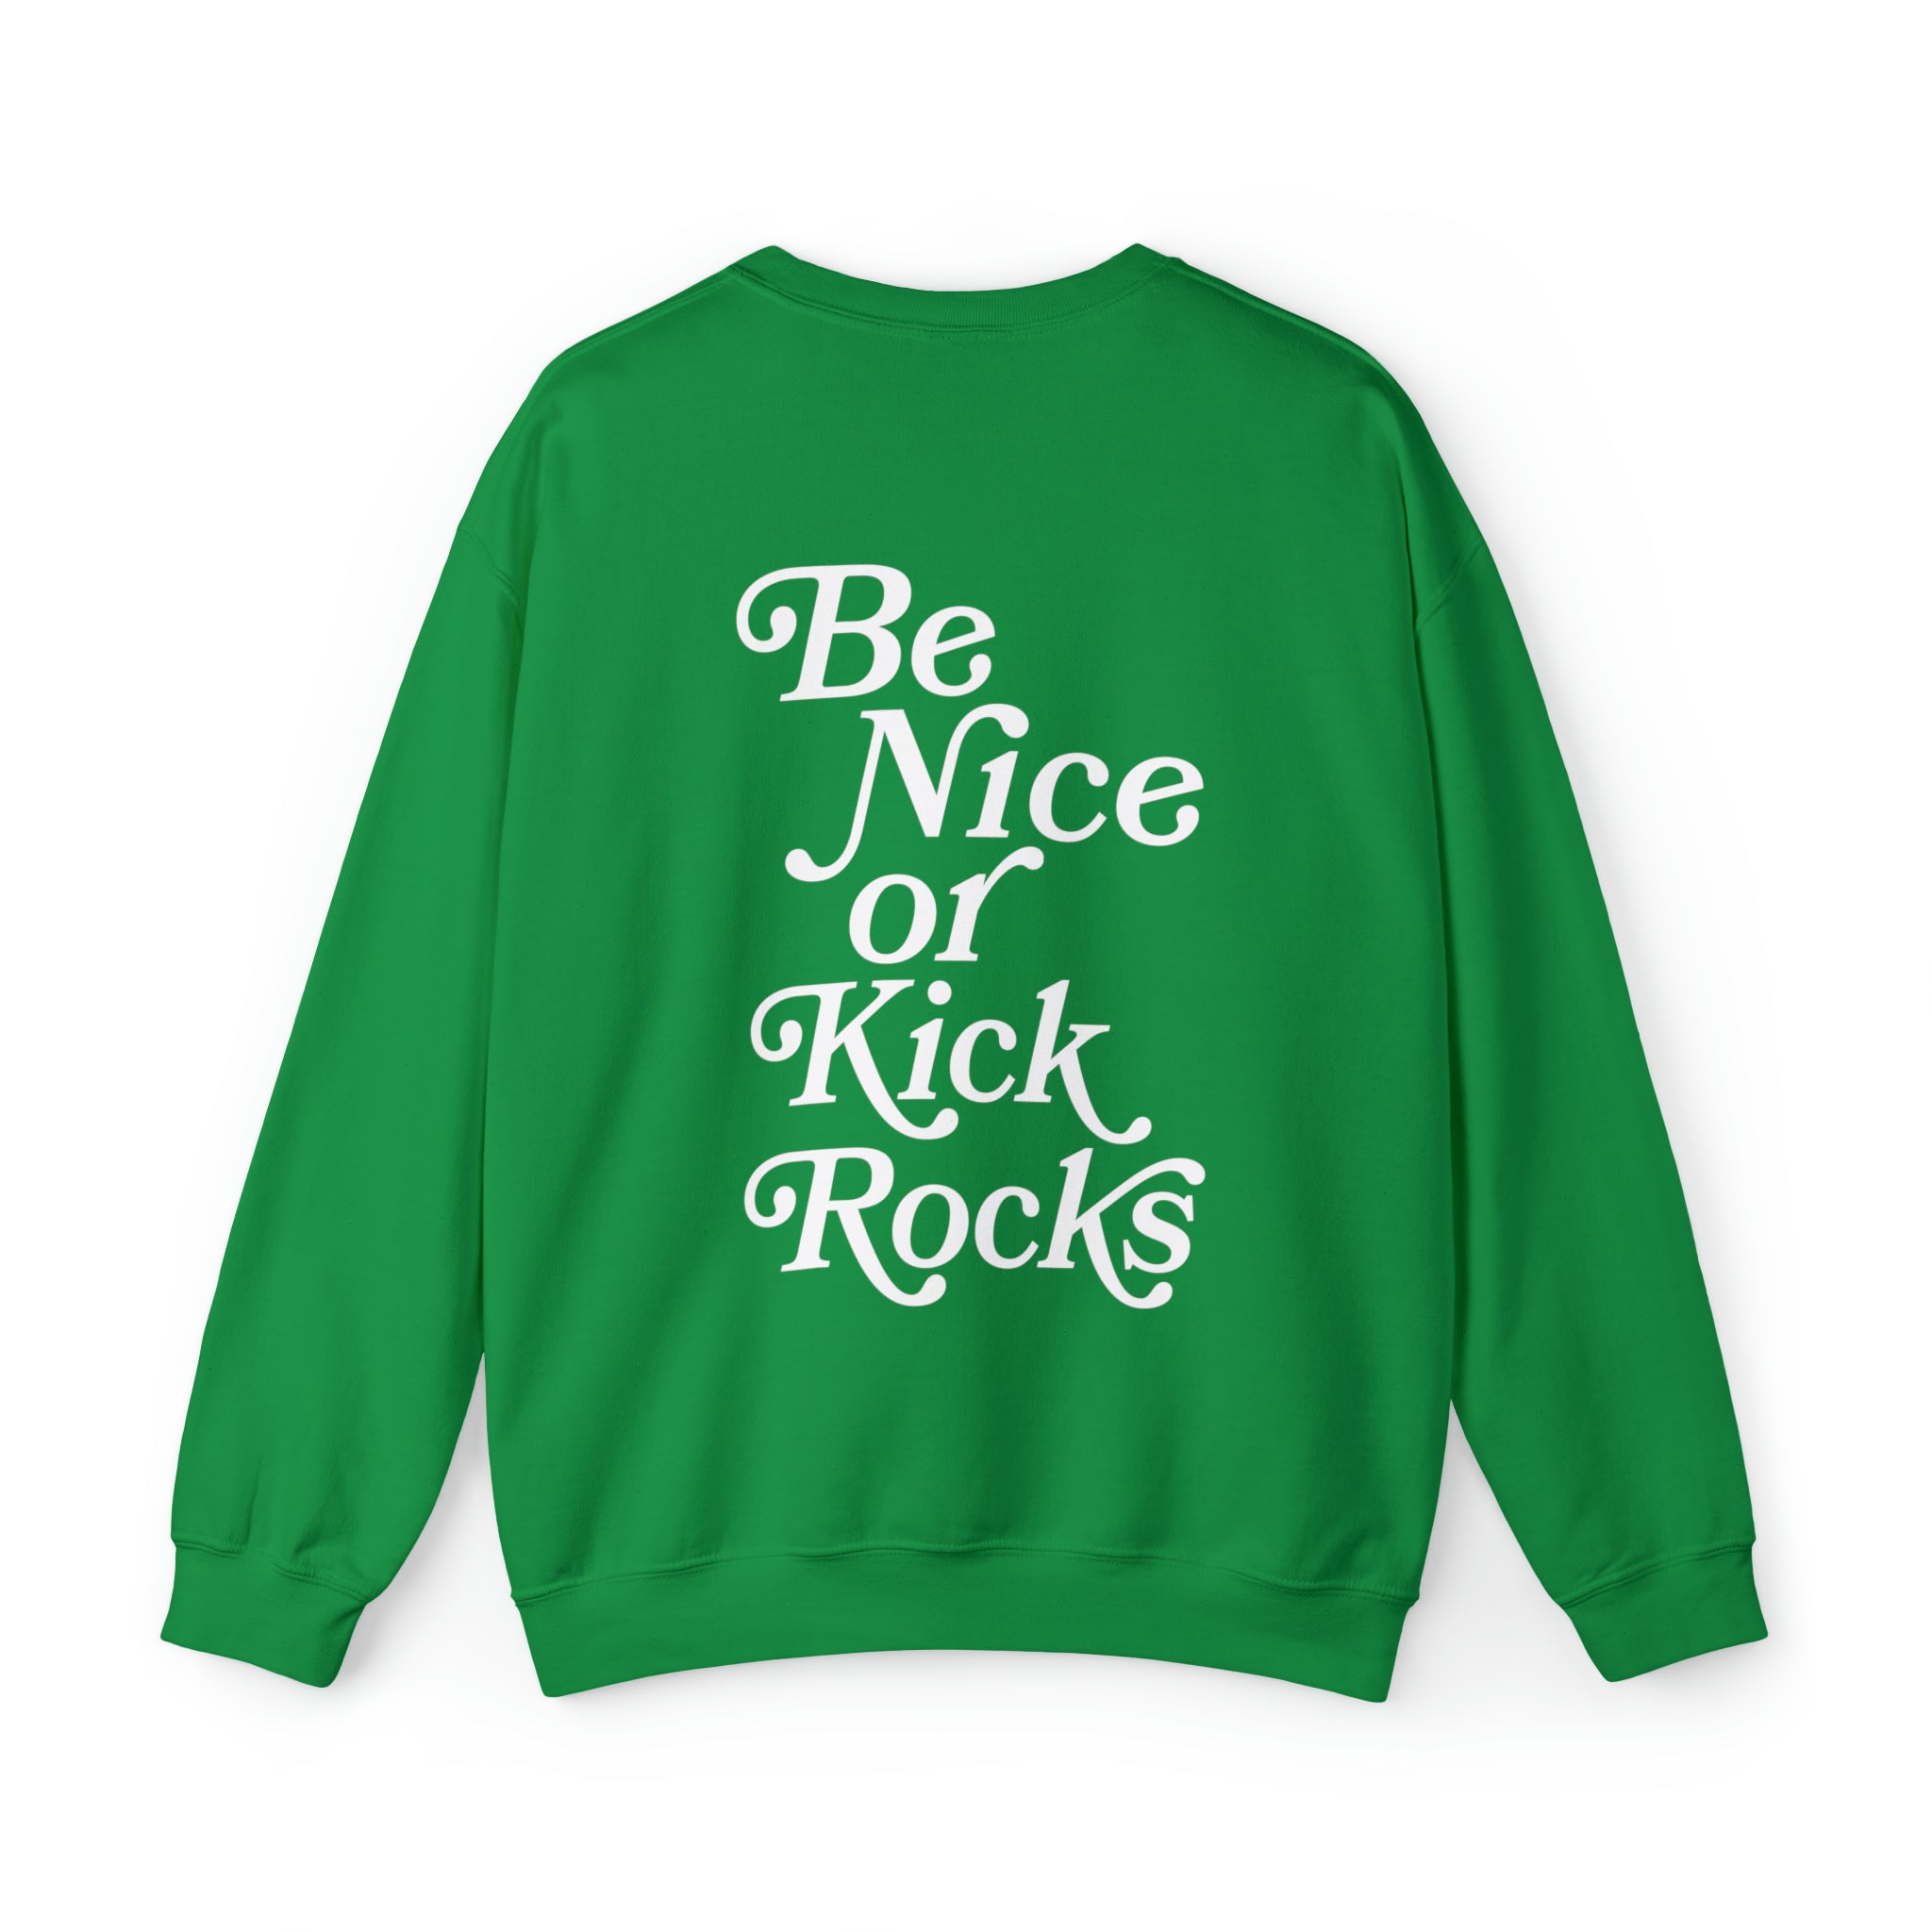 Crewneck sweatshirt in green colors featuring Be Nice or Kick Rocks message